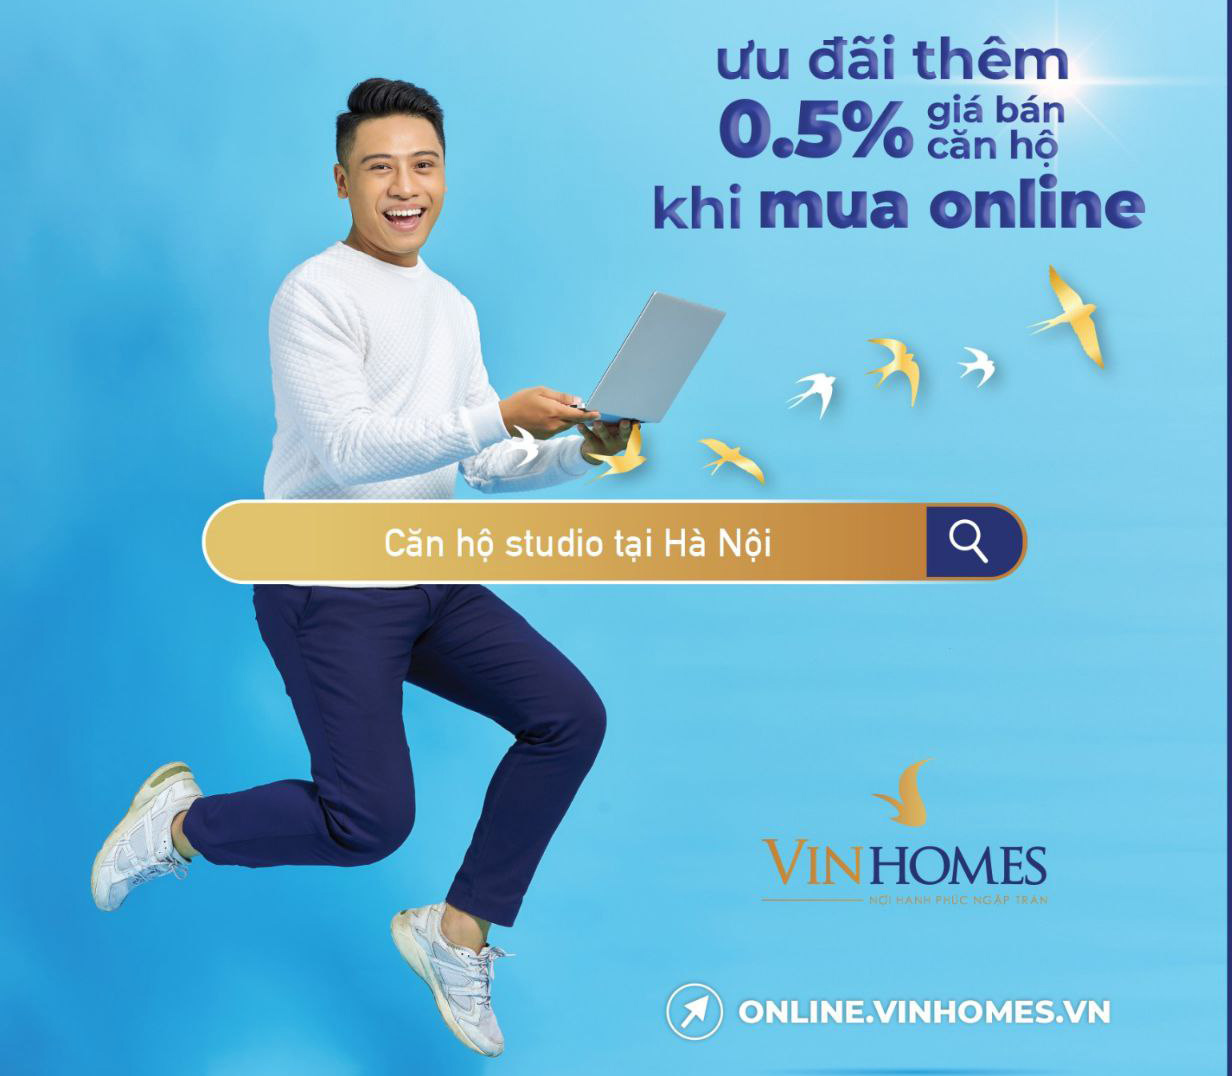 vinhomes online